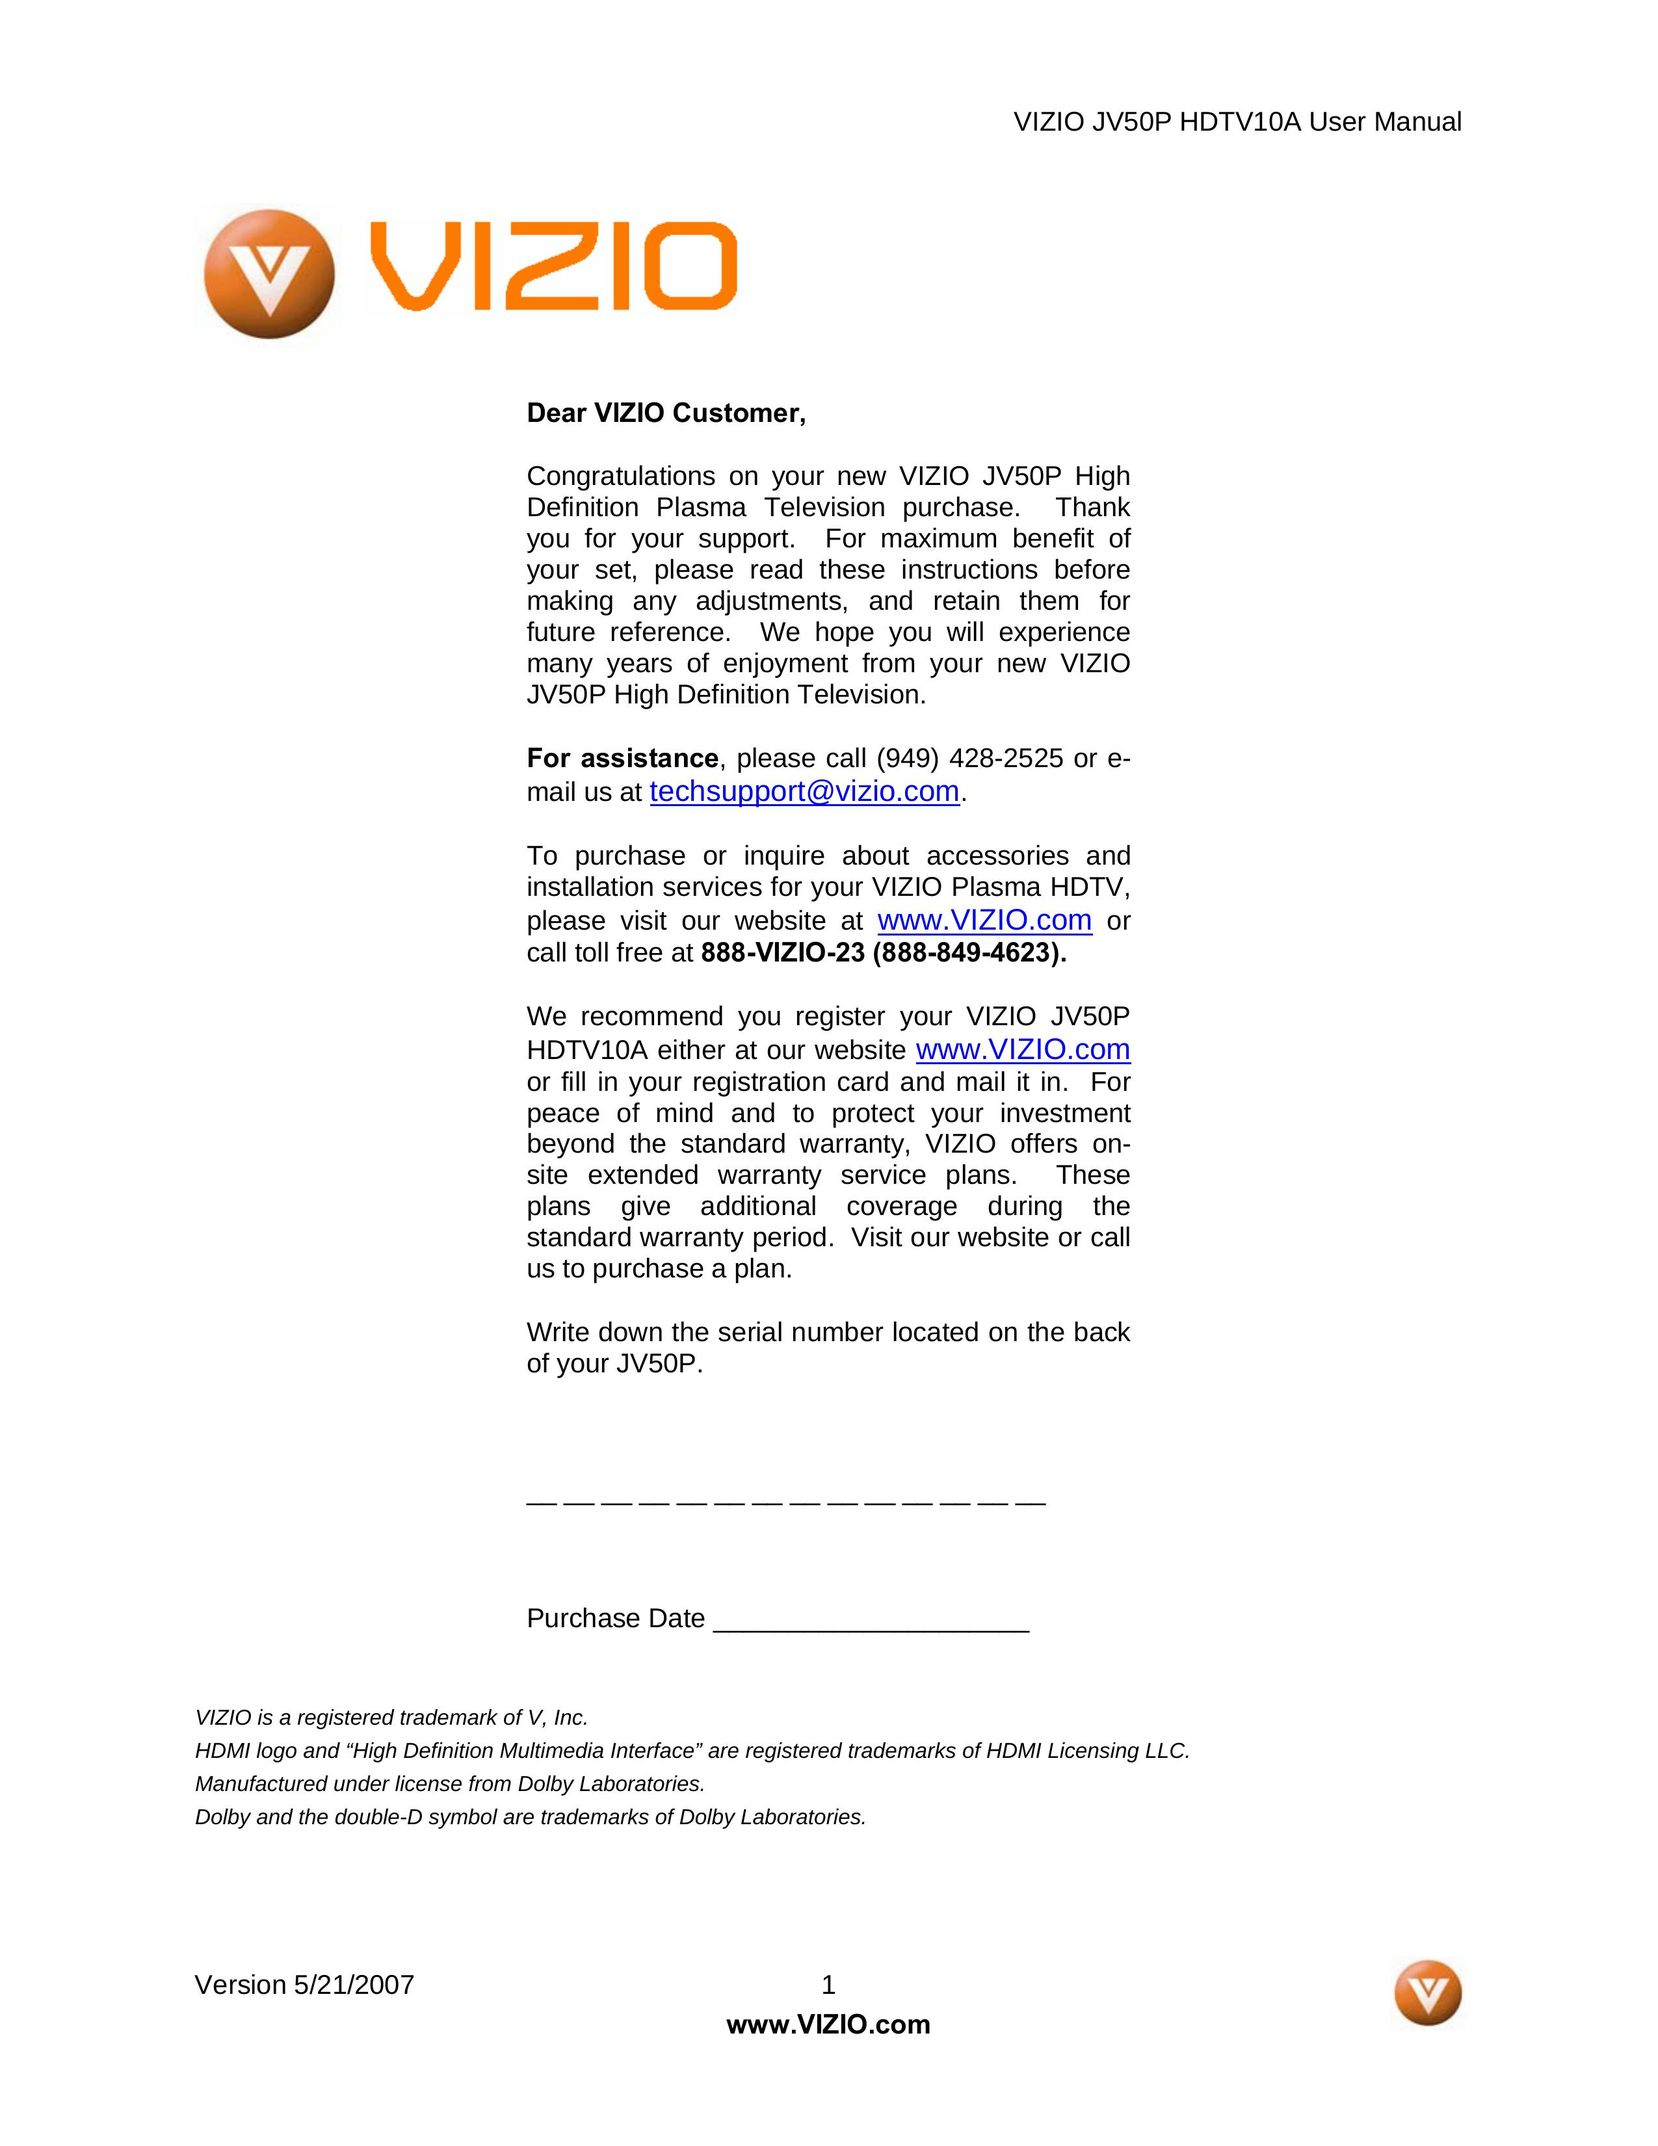 Vizio JV50P TV Receiver User Manual